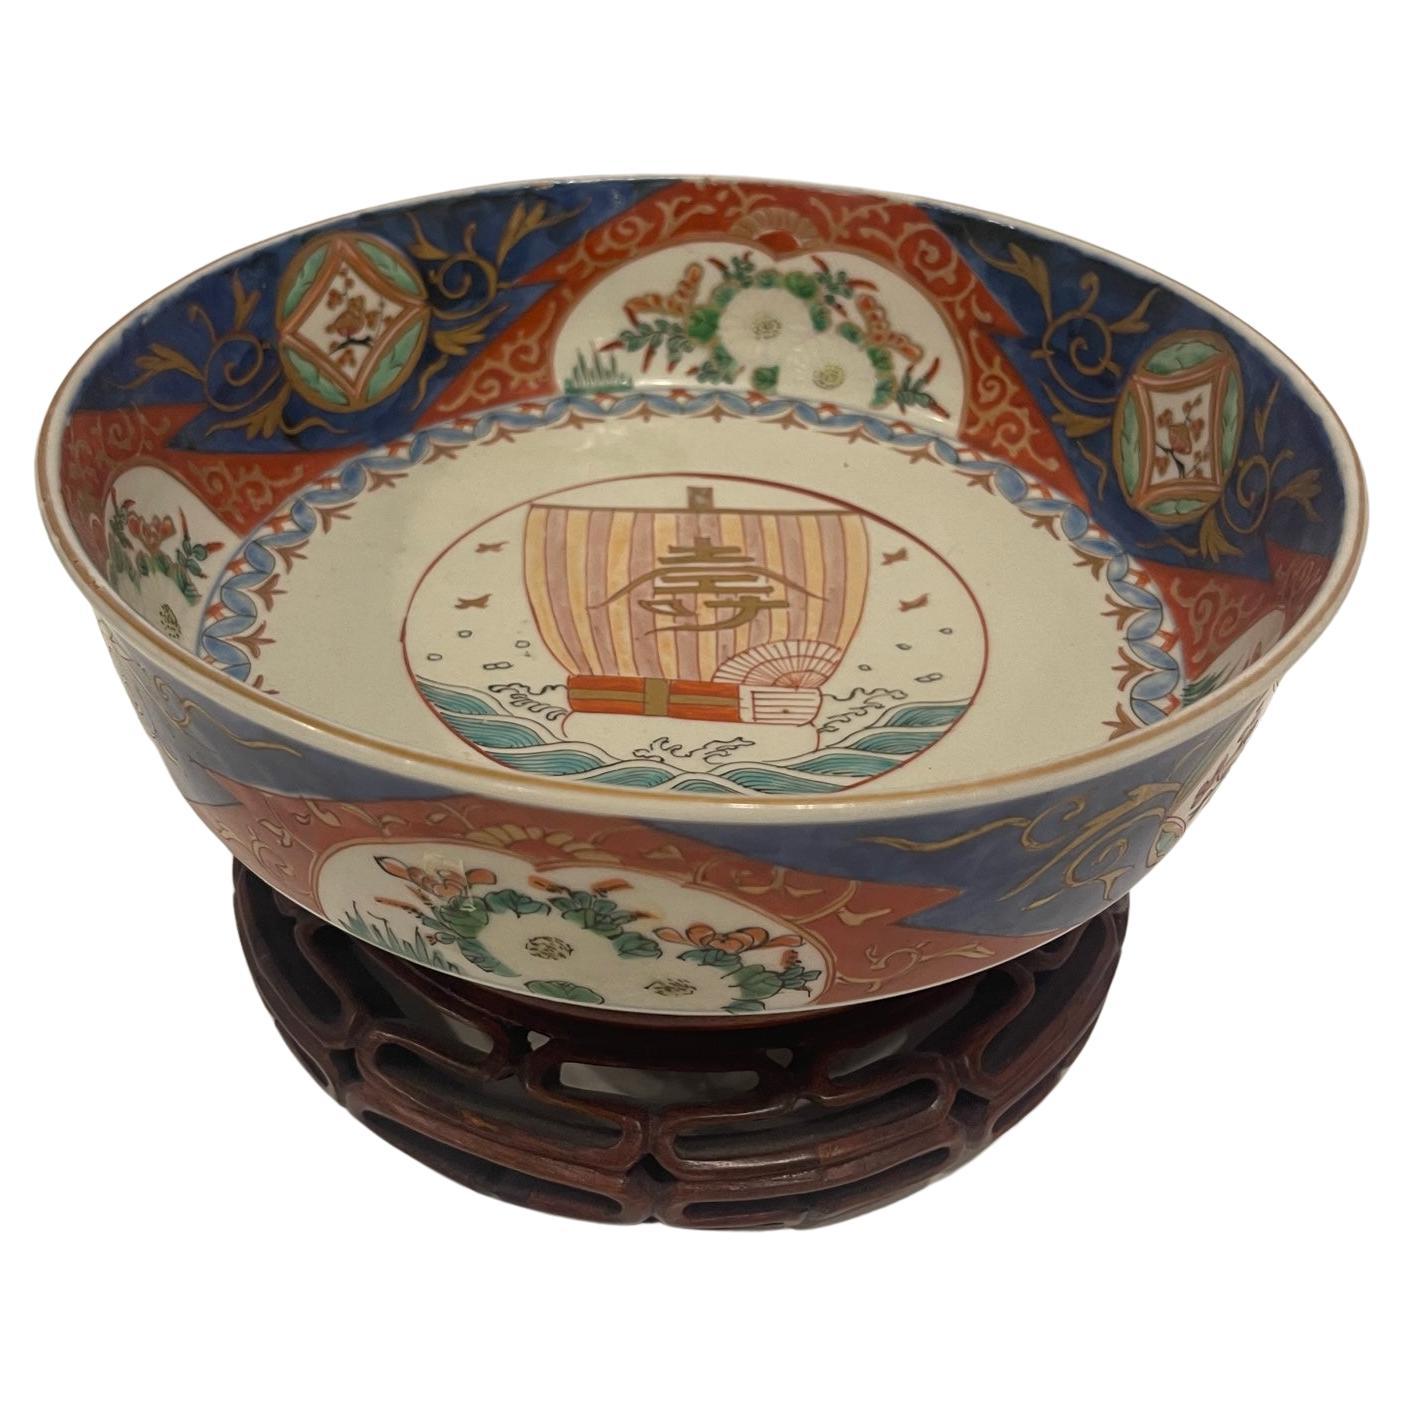 Japanese Imari Bowl on Wood Stand, 19th Century